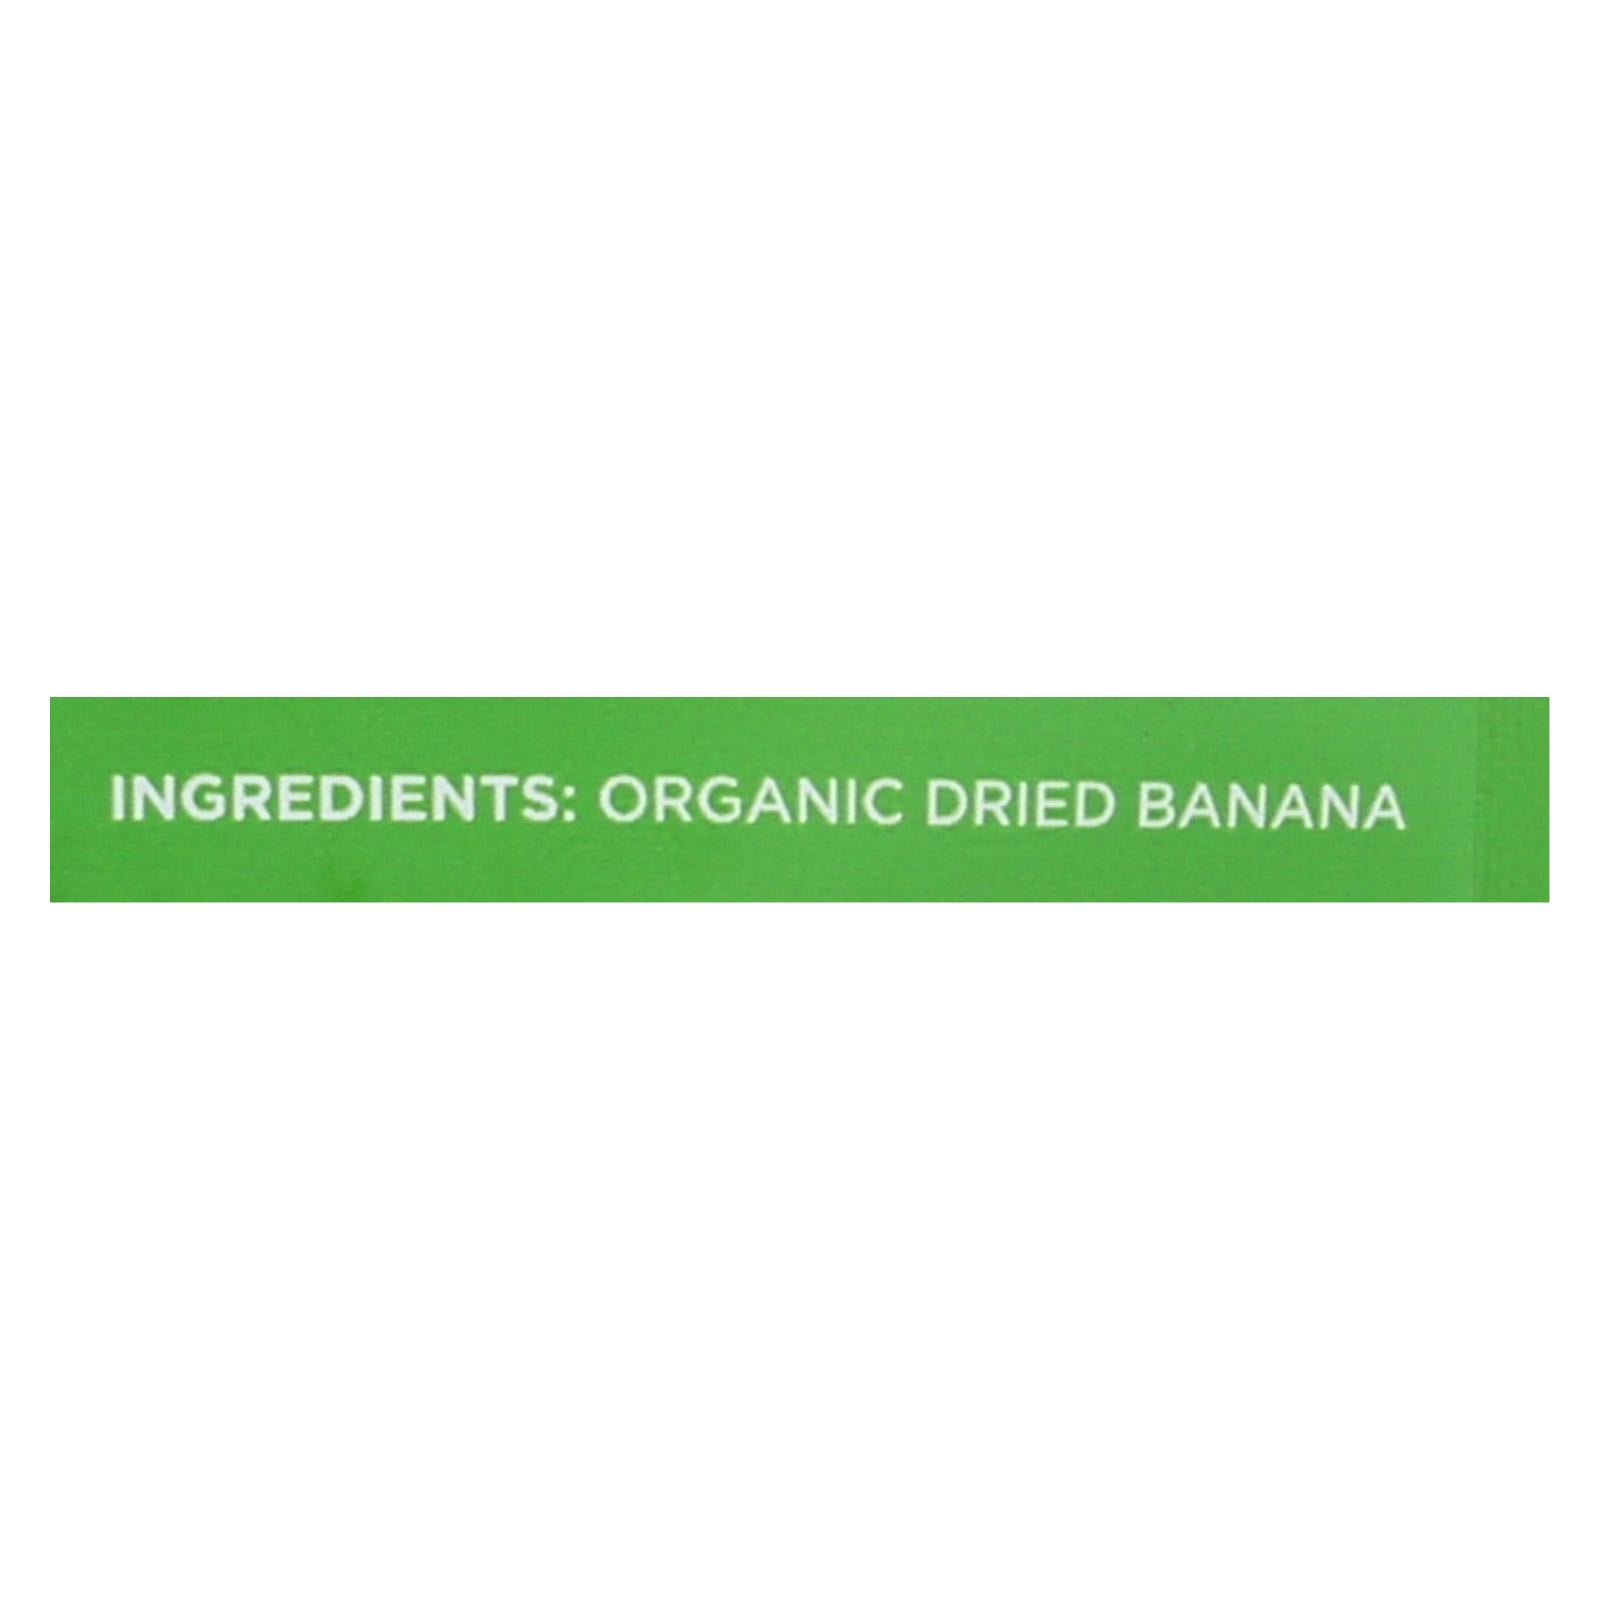 Order Organic Dried Banana Mavuno Harvest